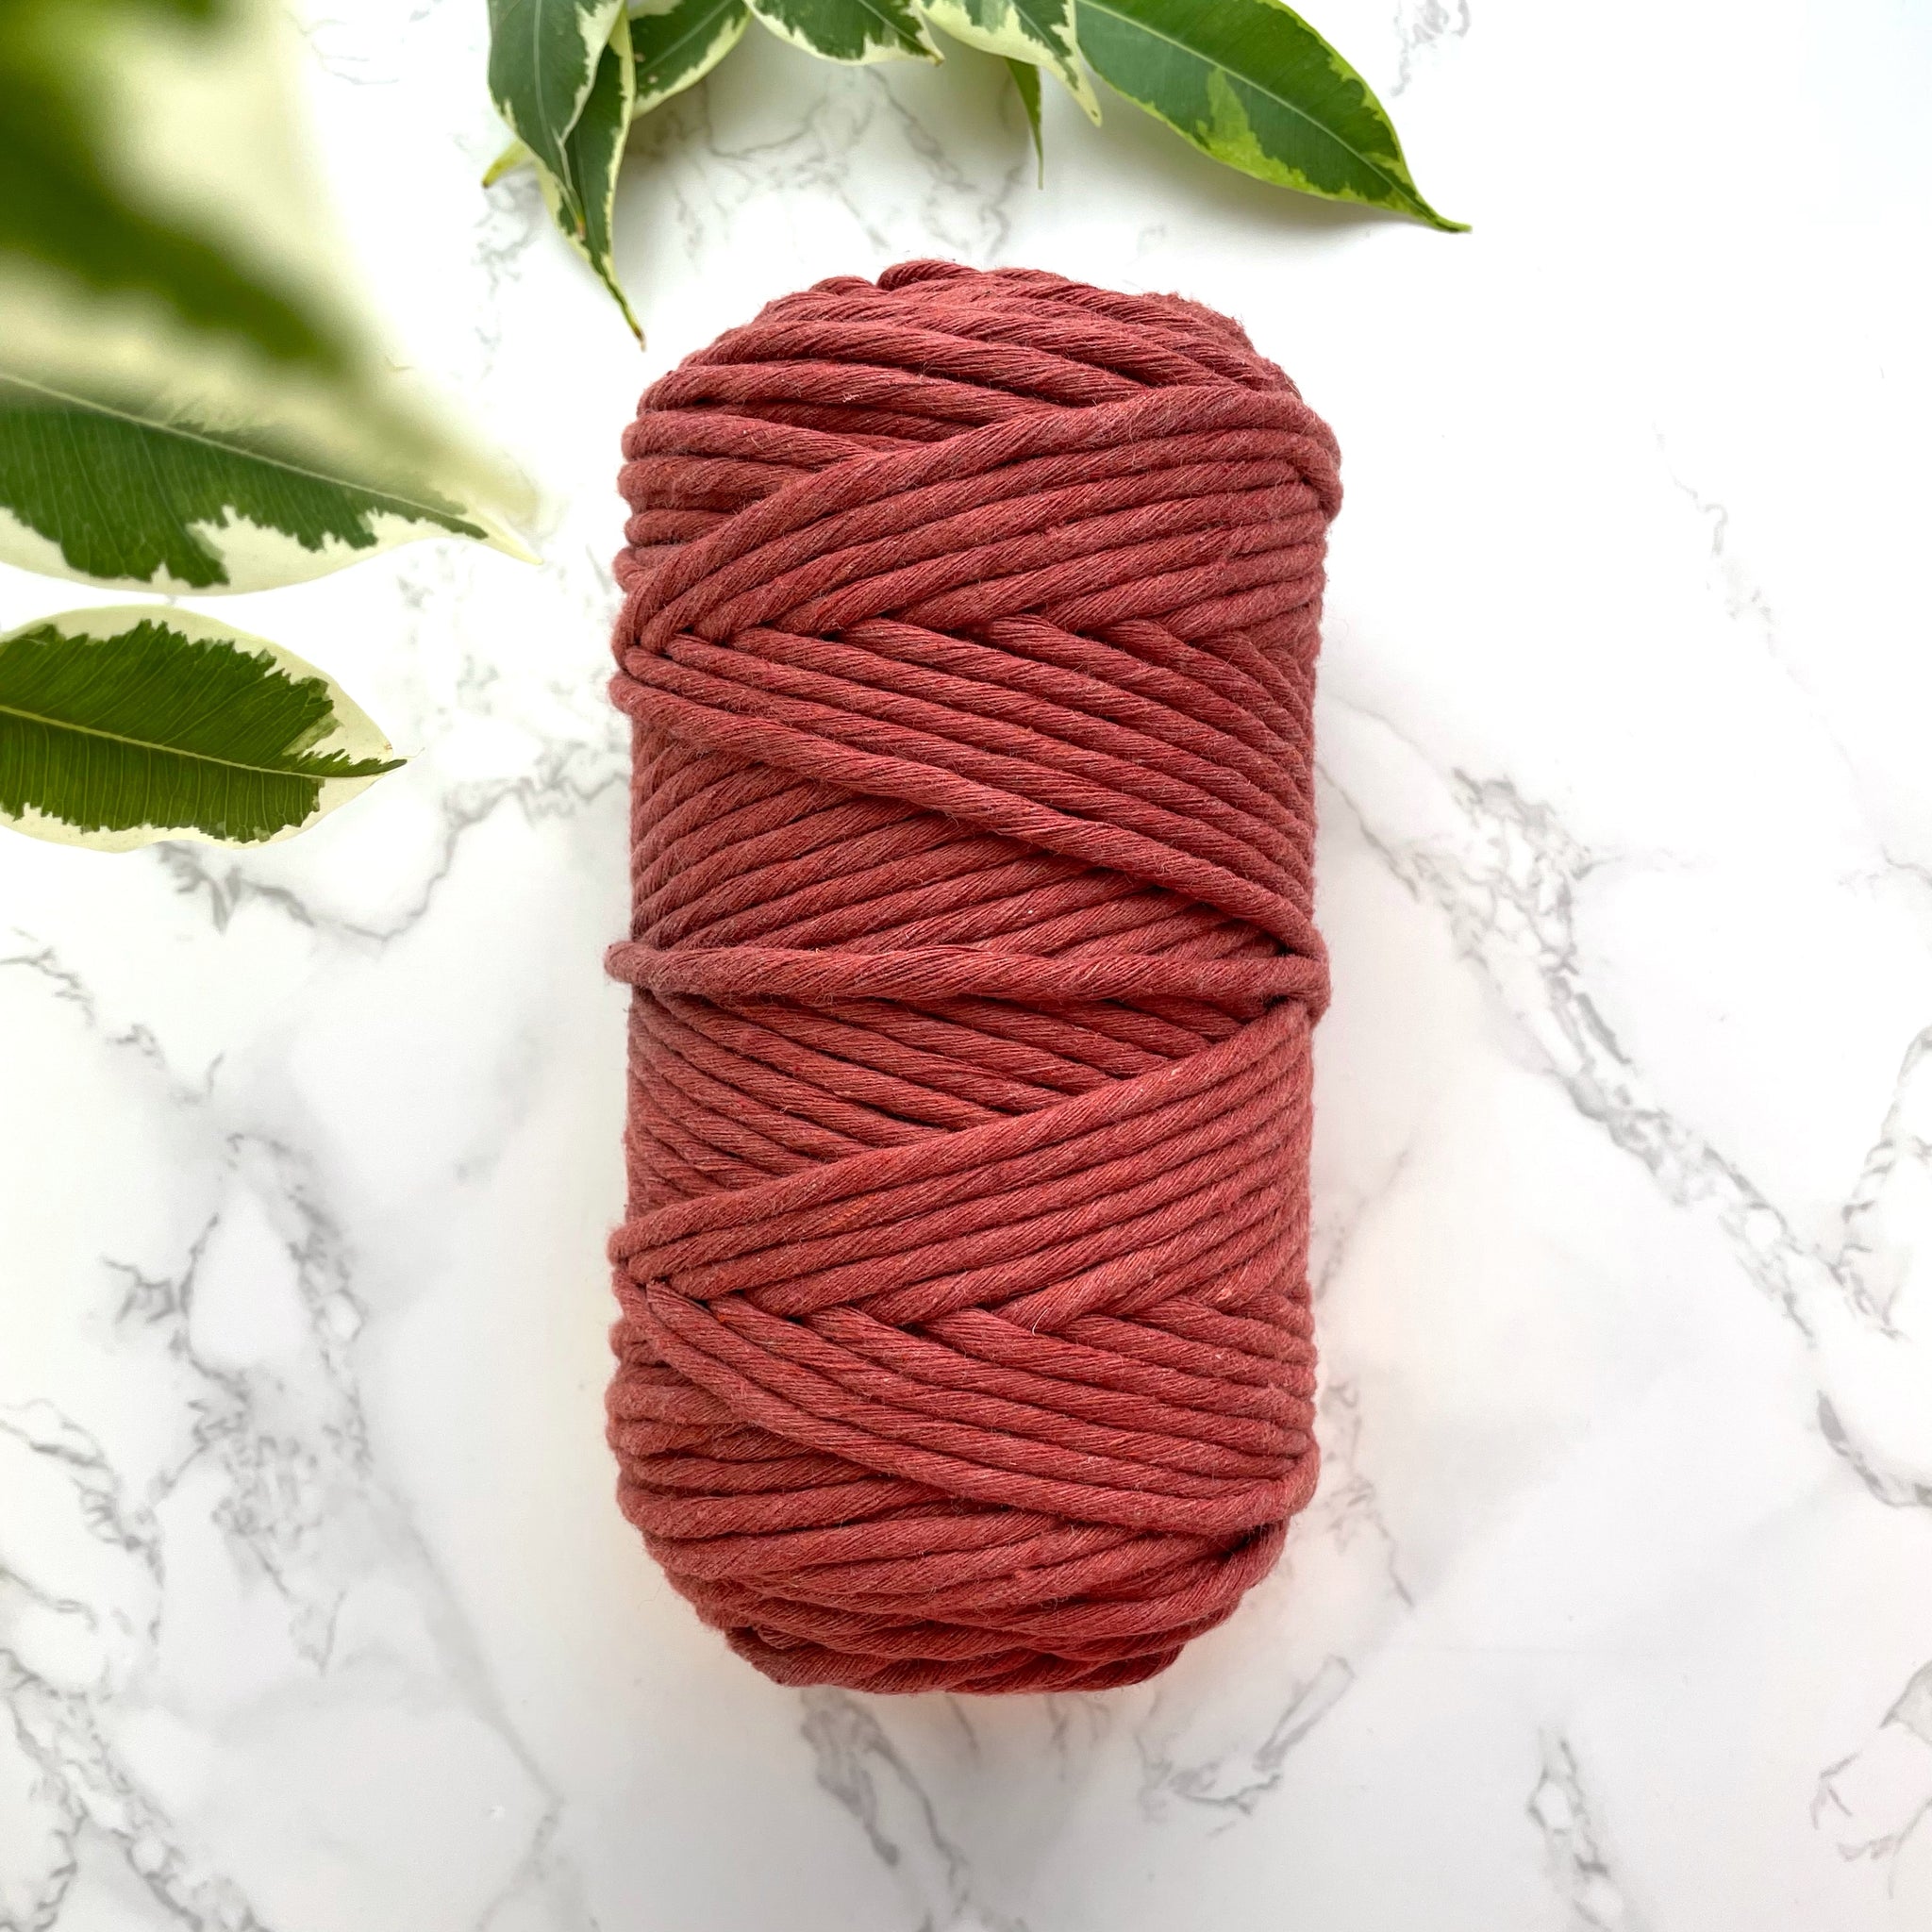 5mm Cotton String - Cinnamon Red